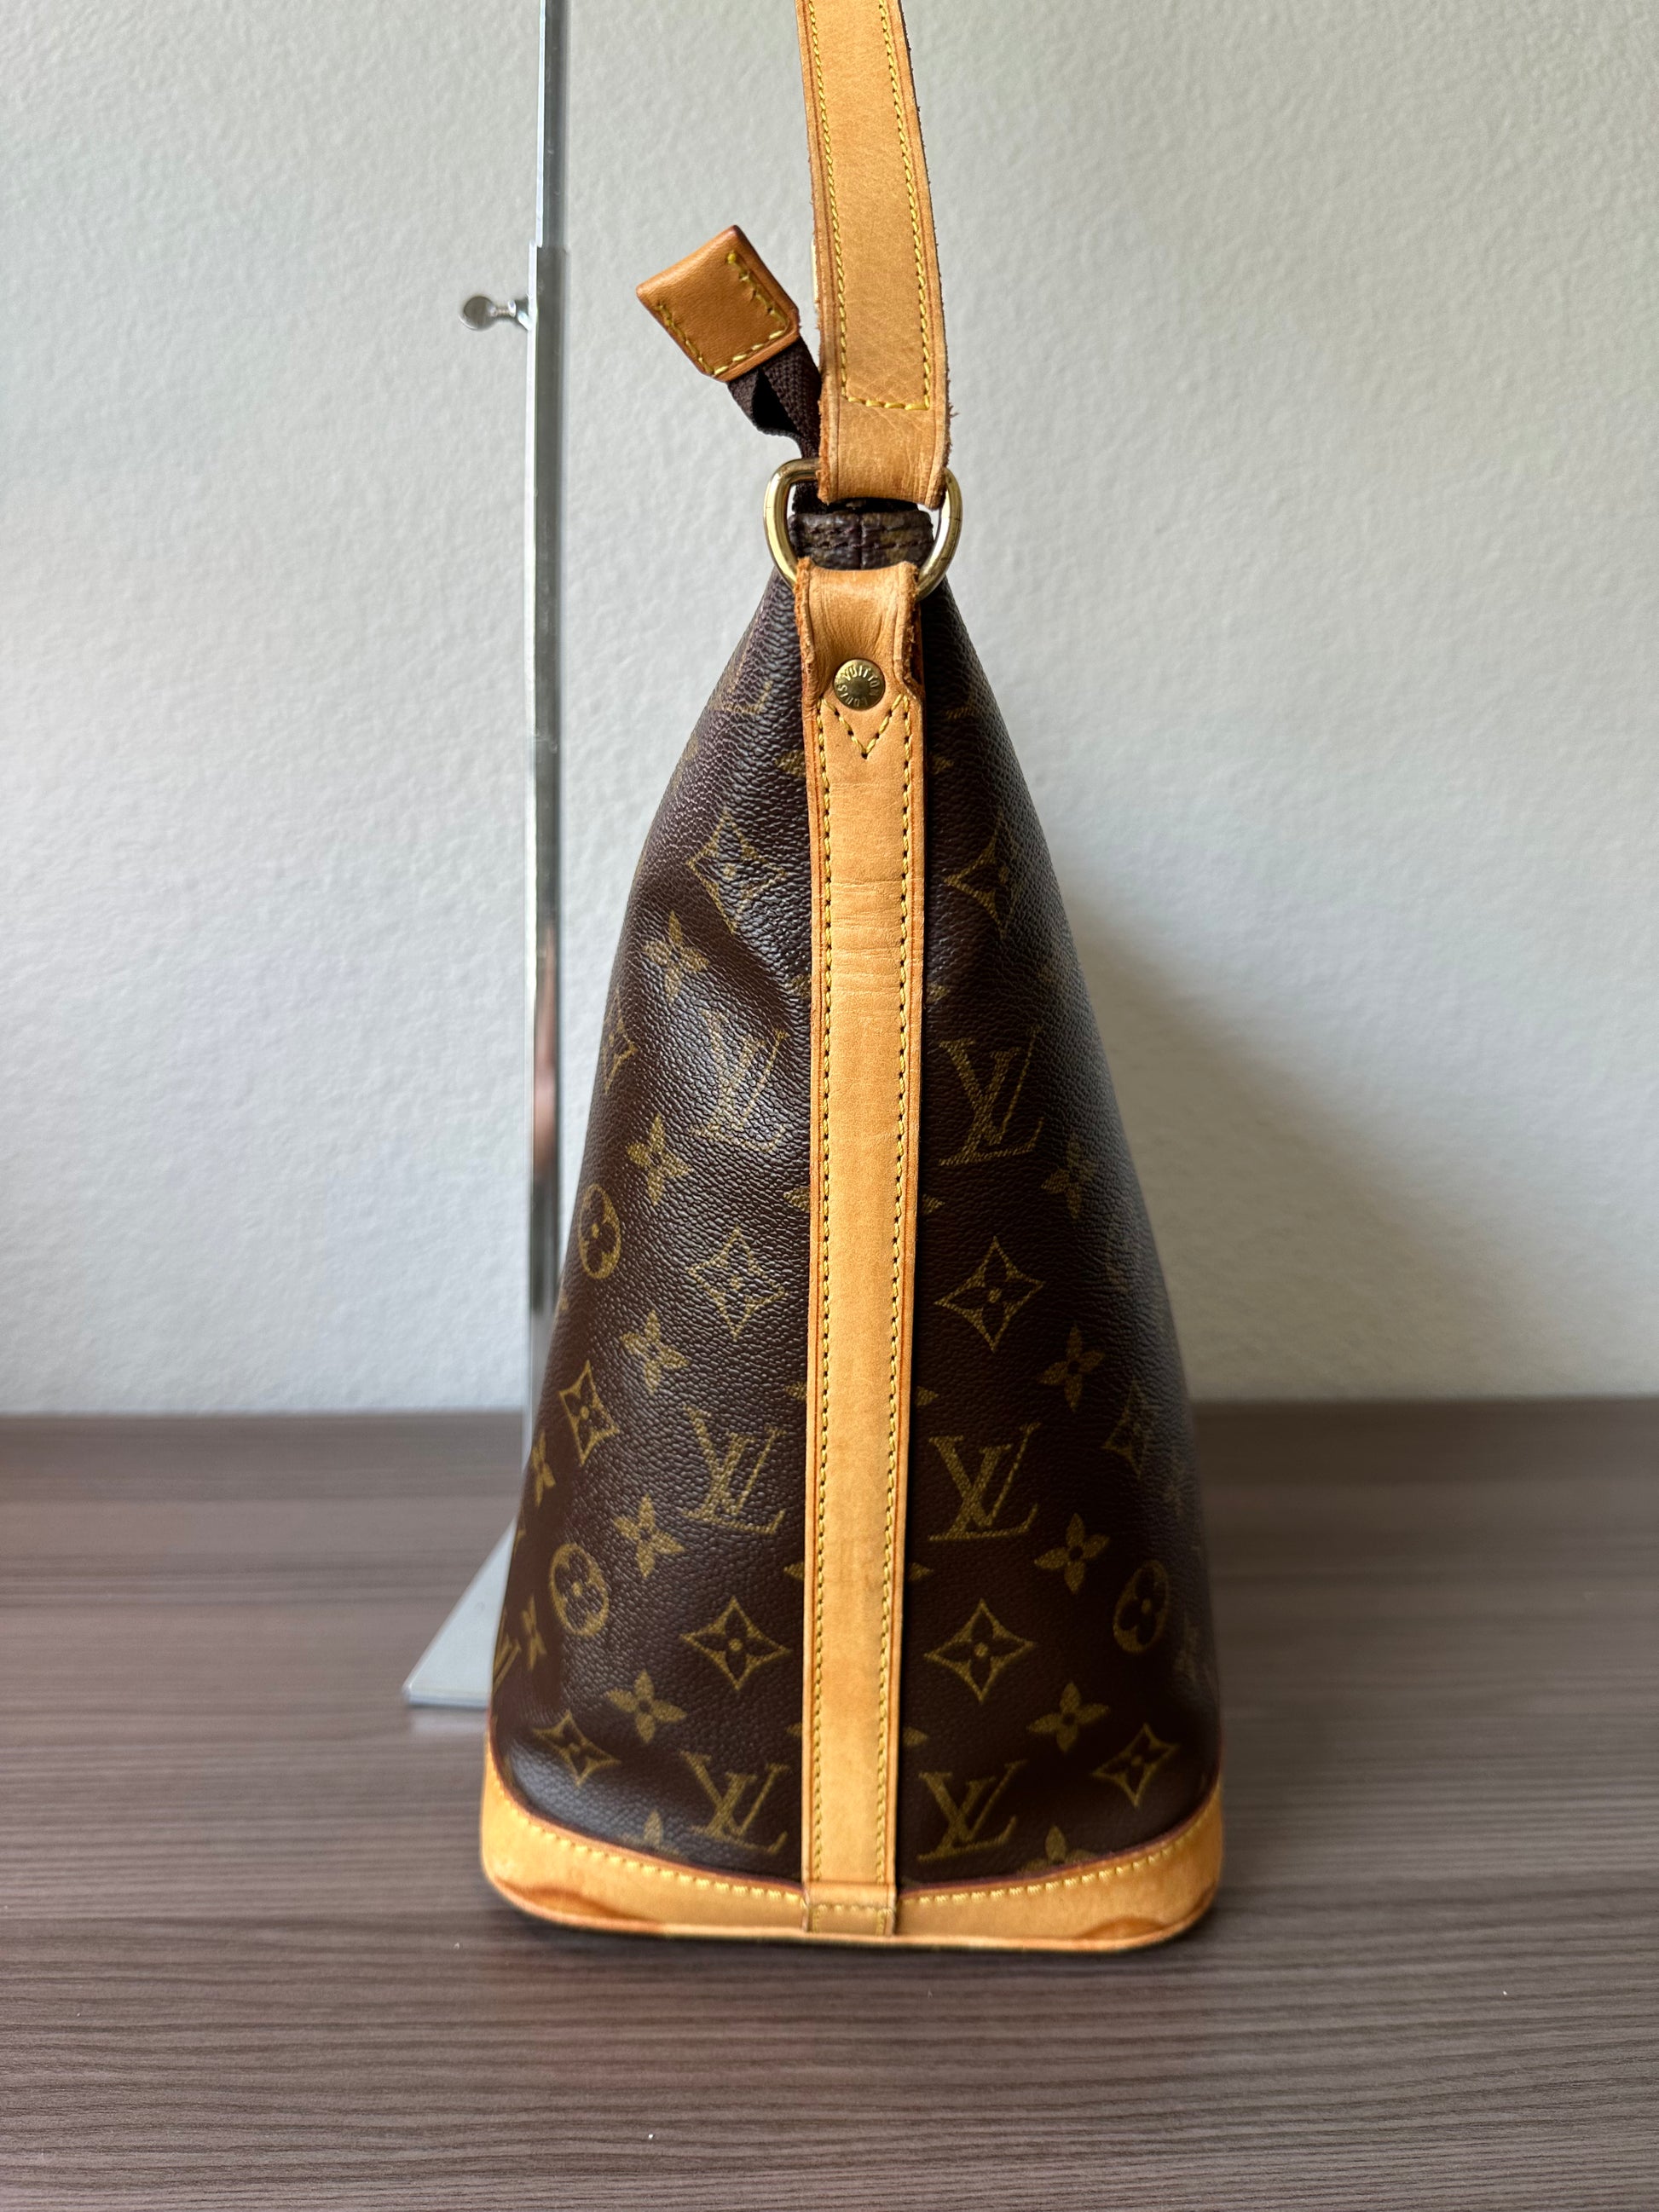 Authentic Louis Vuitton limited edition sharon stone amfar three monogram  shoulder bag